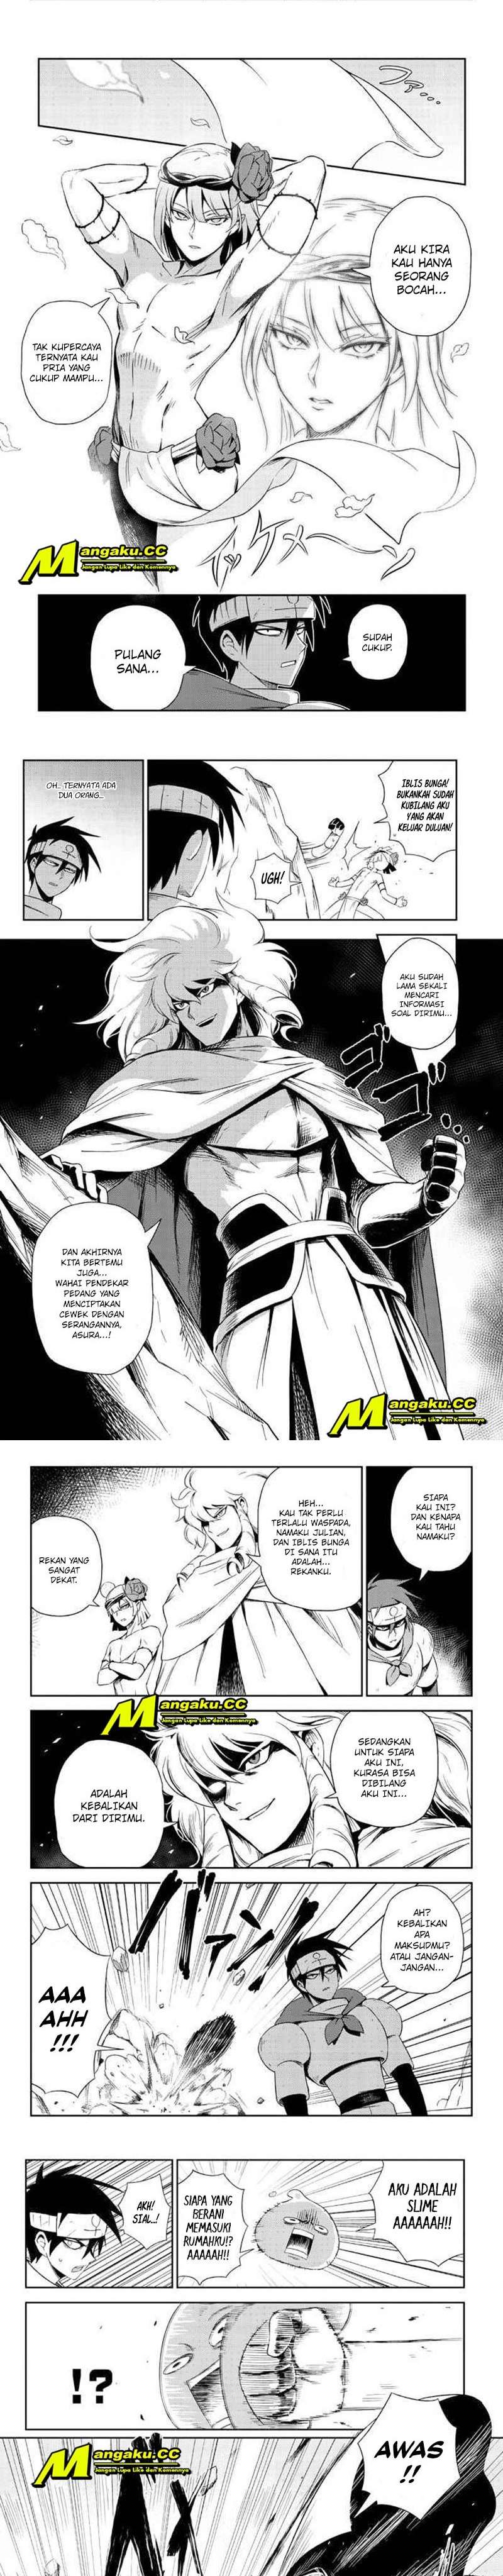 Transmoe Sword Fantasy Chapter 5